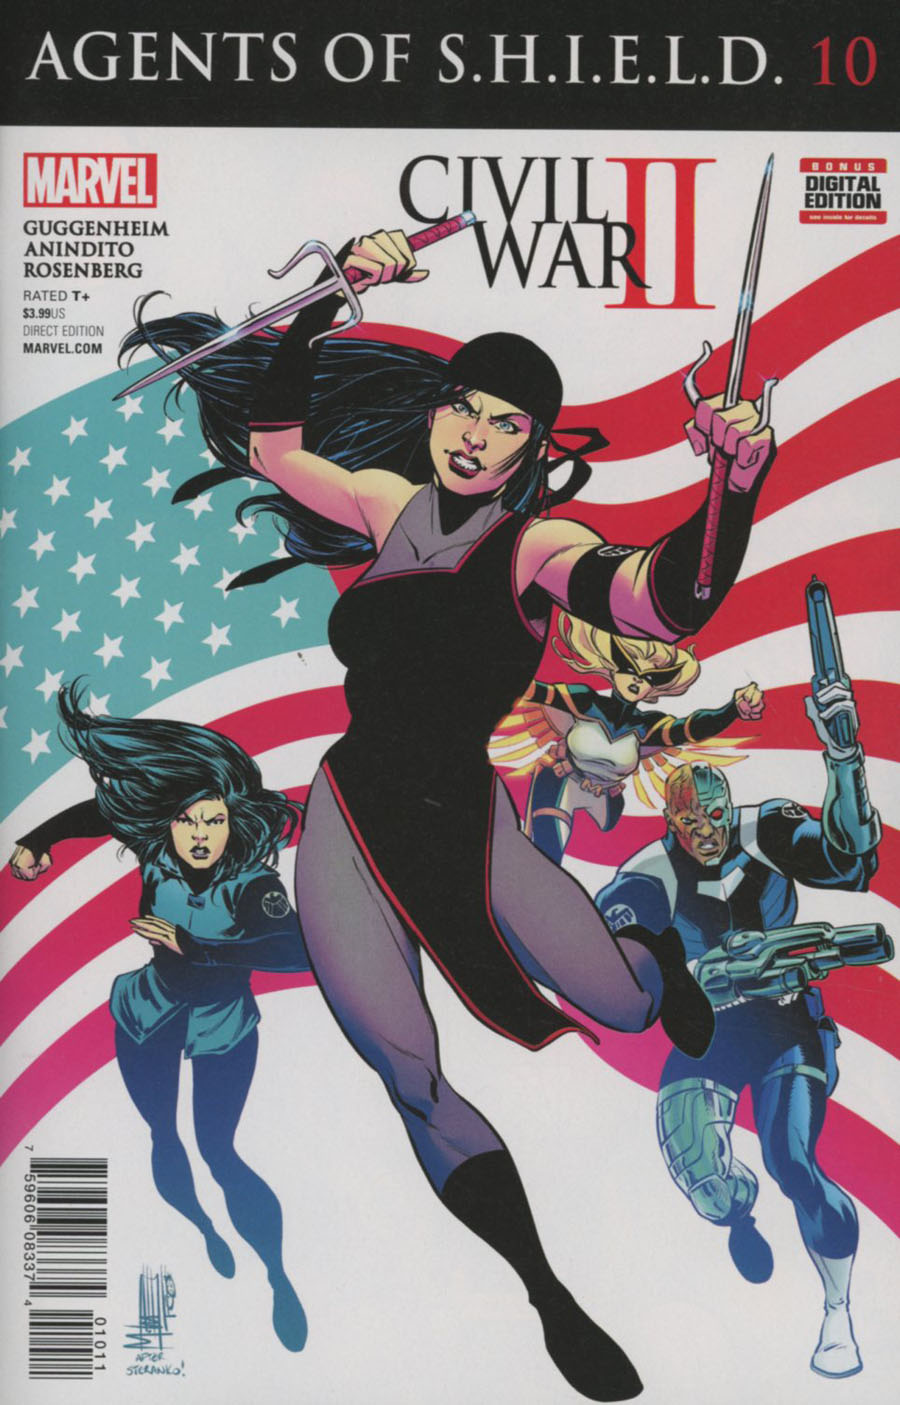 Agents Of S.H.I.E.L.D. #10 (Civil War II Tie-In)